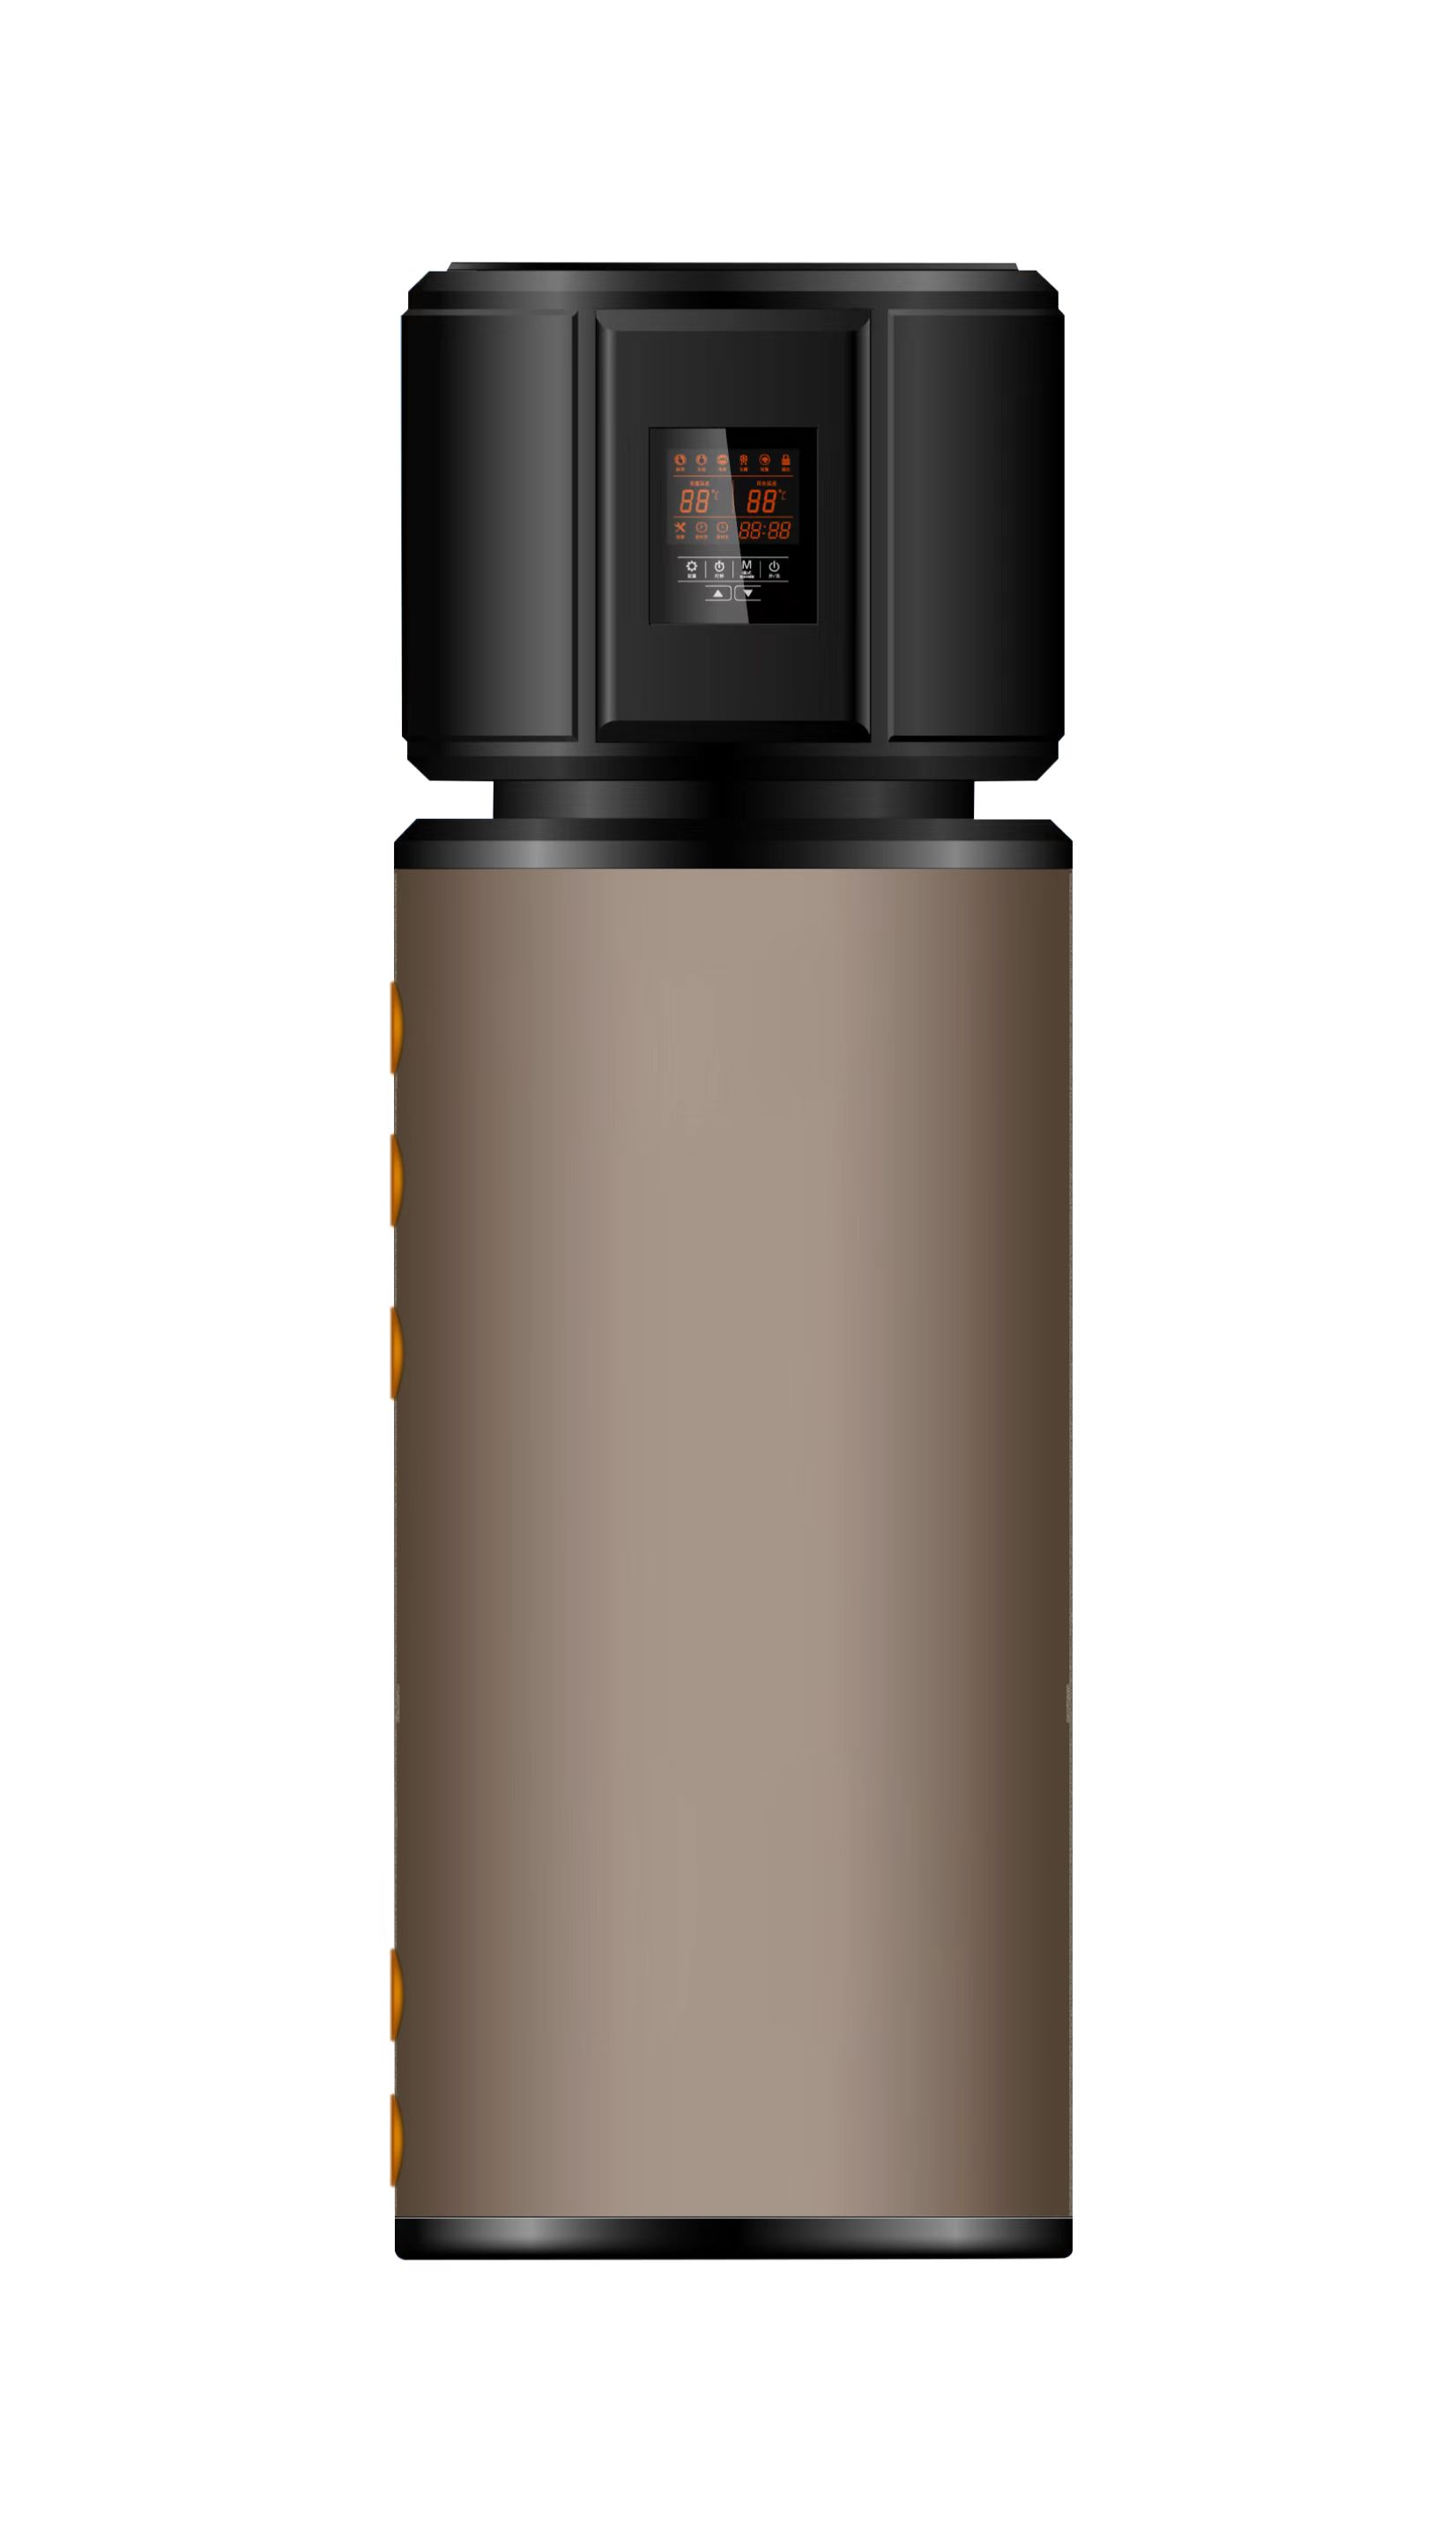 All -in-one Heat Pump Water Heater 